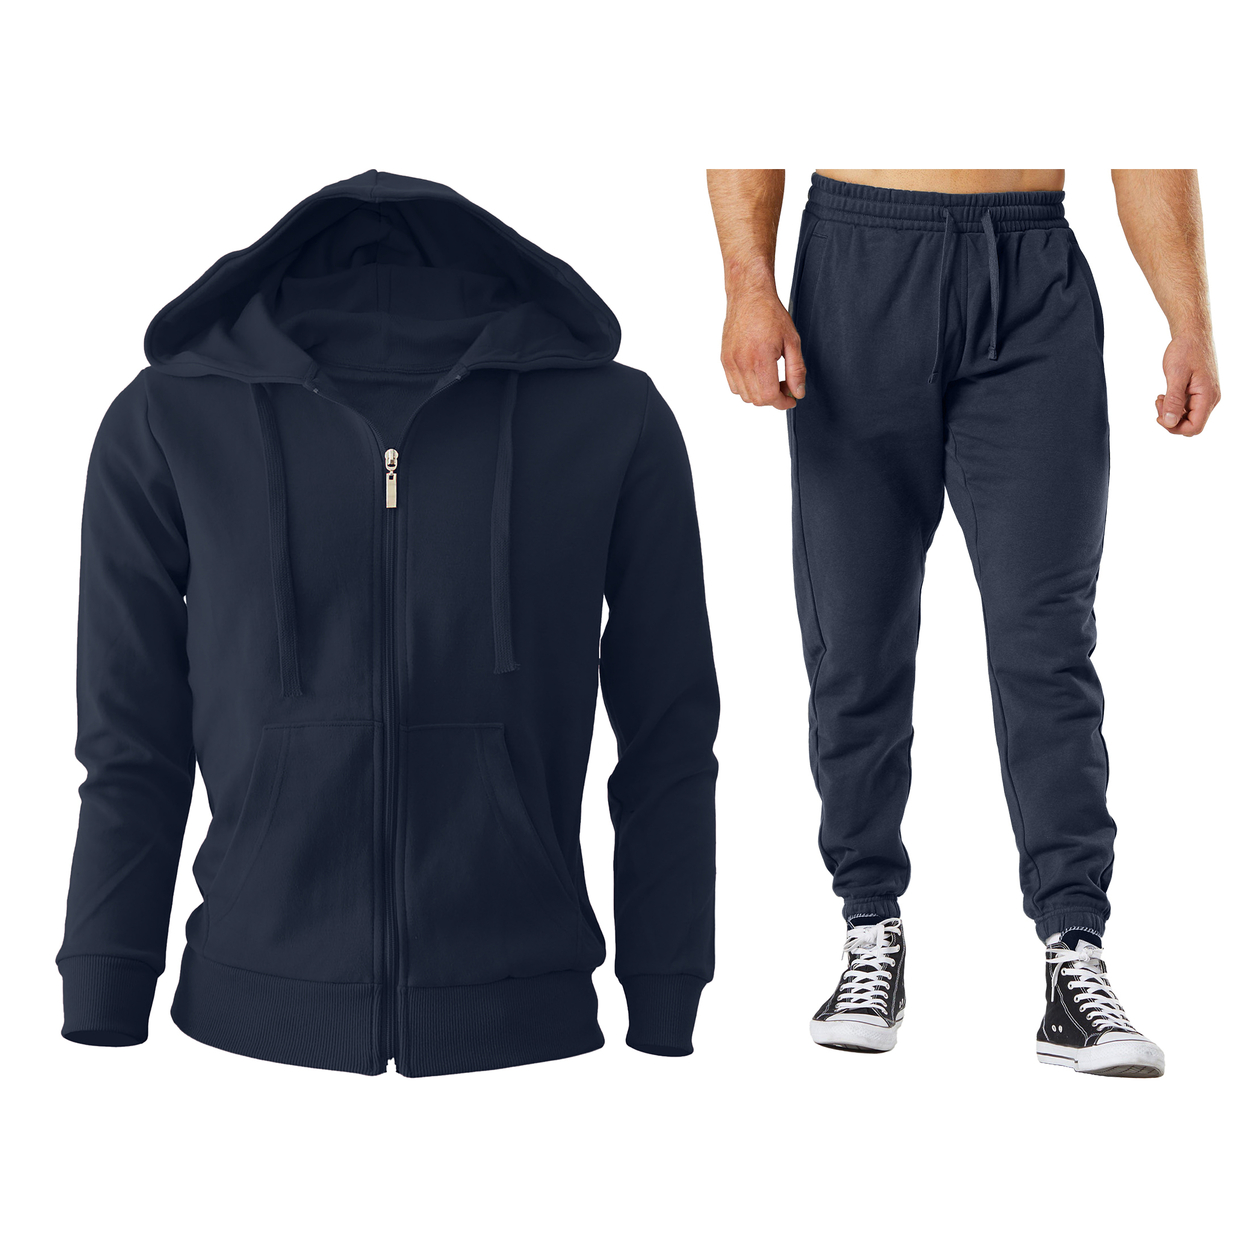 4-Piece: Men's Winter Warm Cozy Athletic Multi-Pockets BIG & TALL Sweatsuit Set - Navy, Large